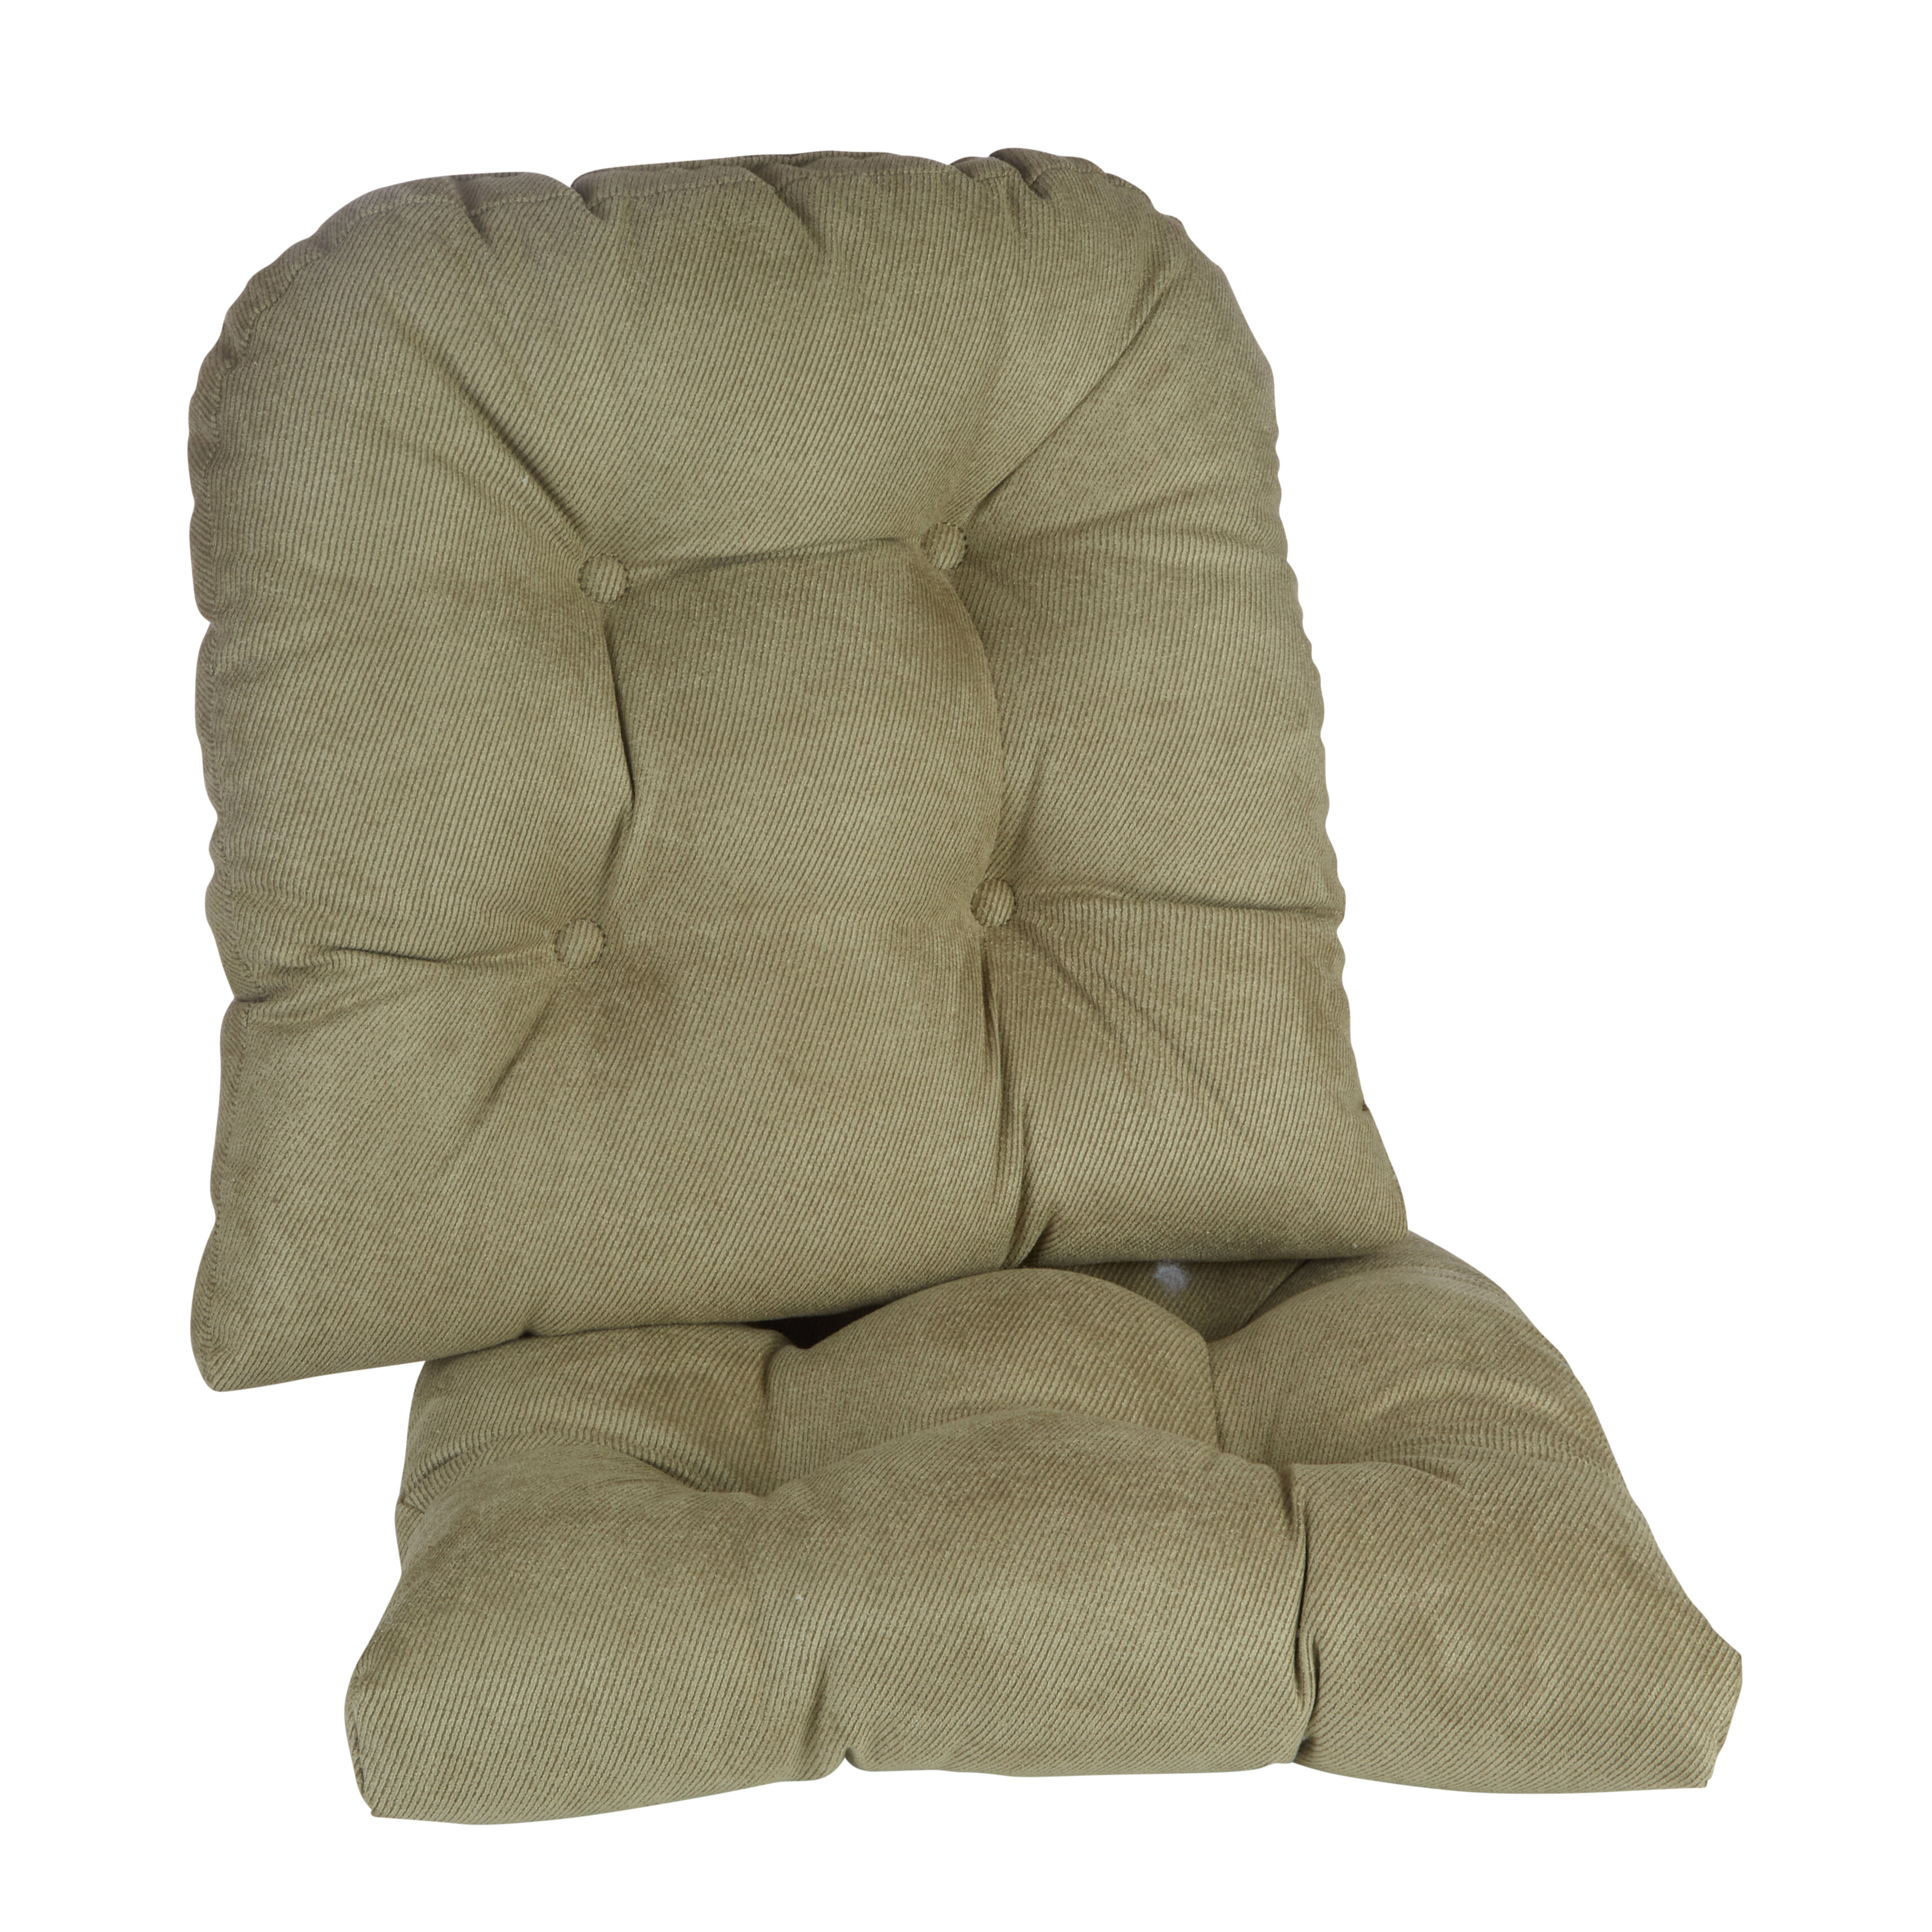 Memory Foam Dining Chair Cushion Winston Porter Fabric: Chocolate